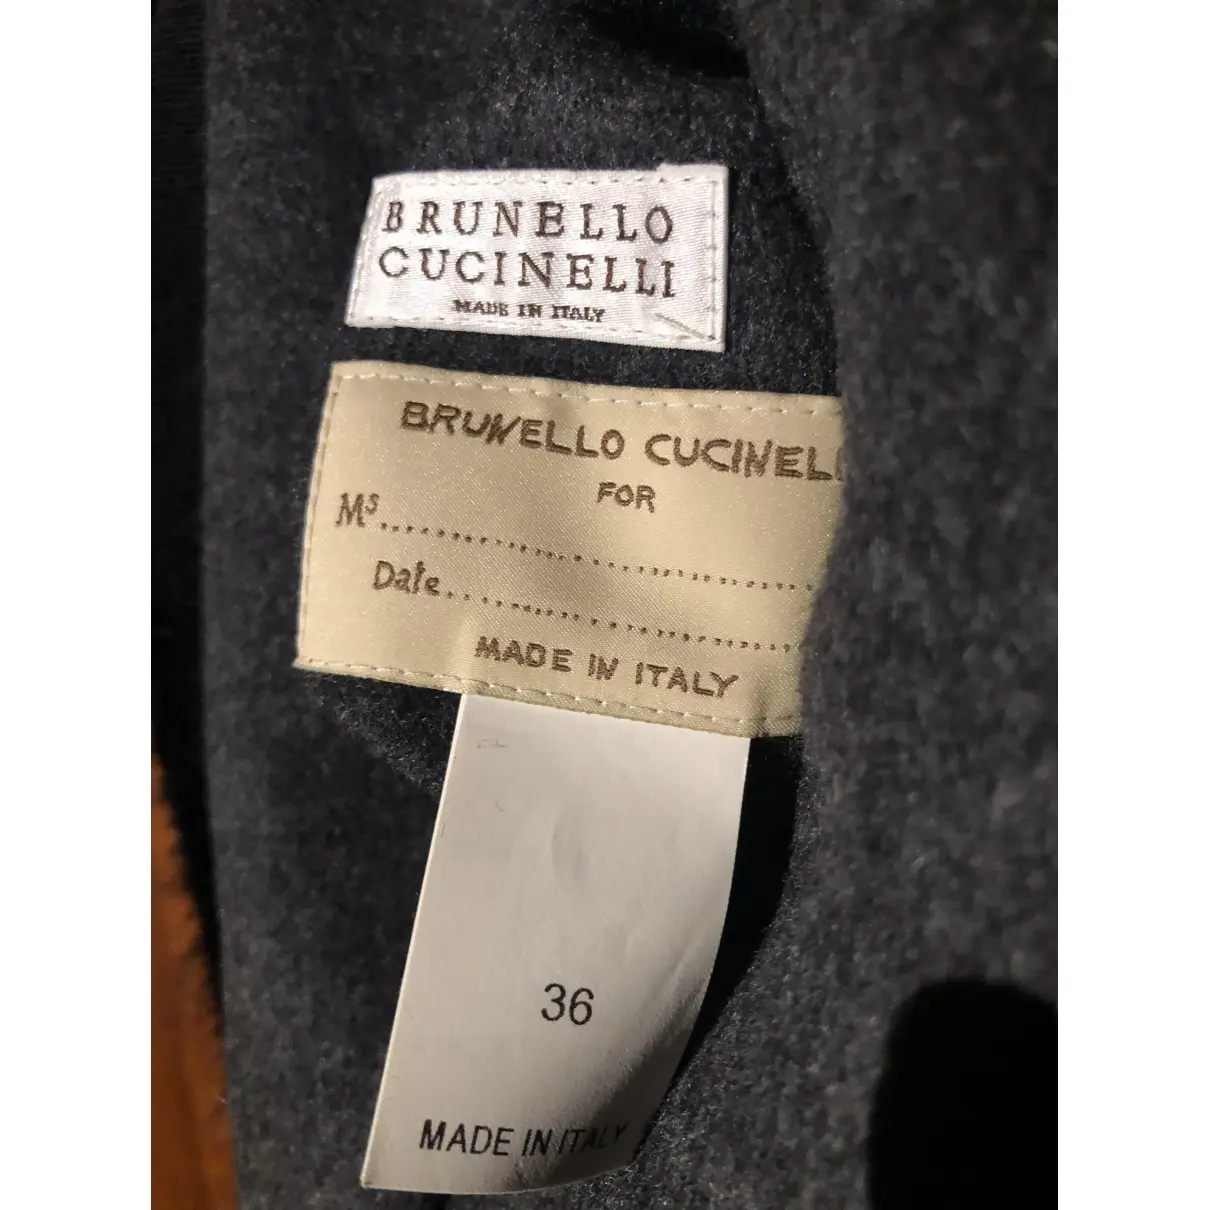 Buy Brunello Cucinelli Cashmere trench coat online